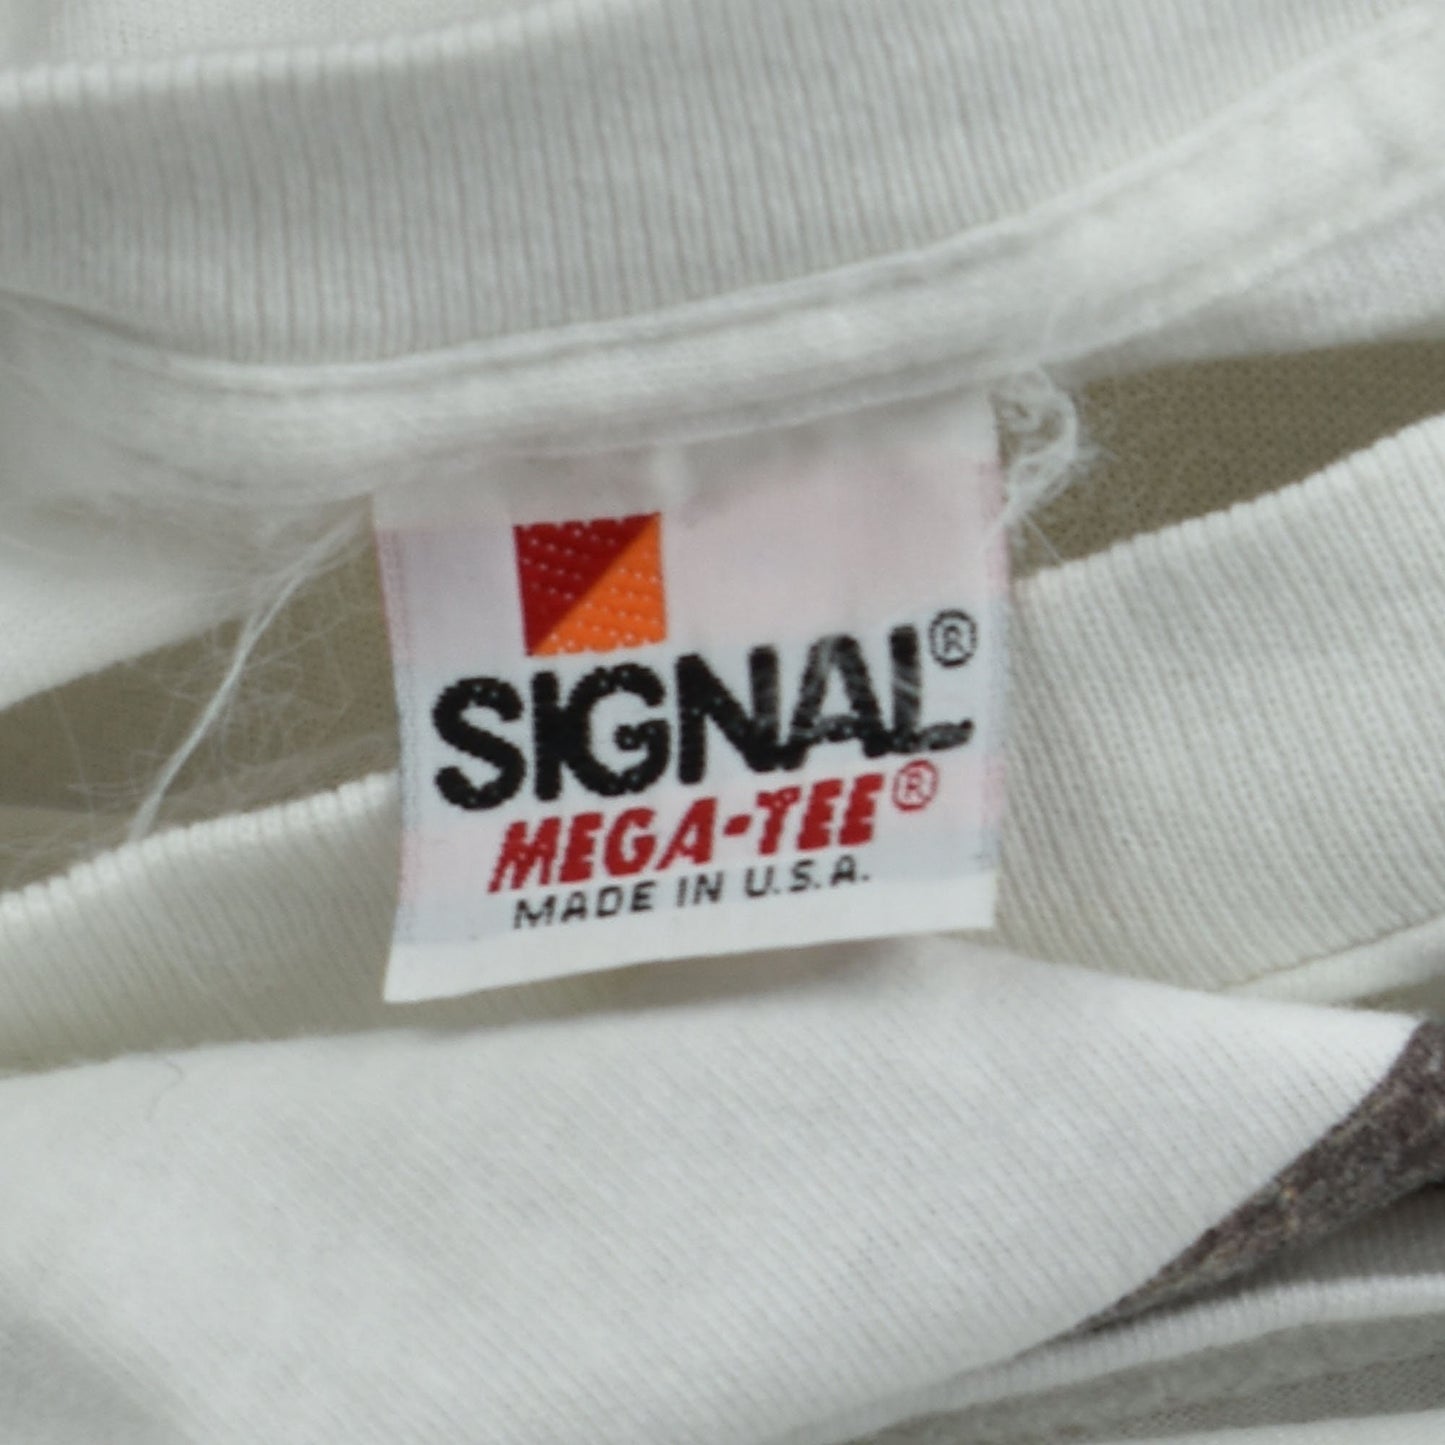 Vintage 1991 "Mona Lisa" Marlin Tease Printed Signal Mega-Tee Made in USA 100% Cotton- Size M